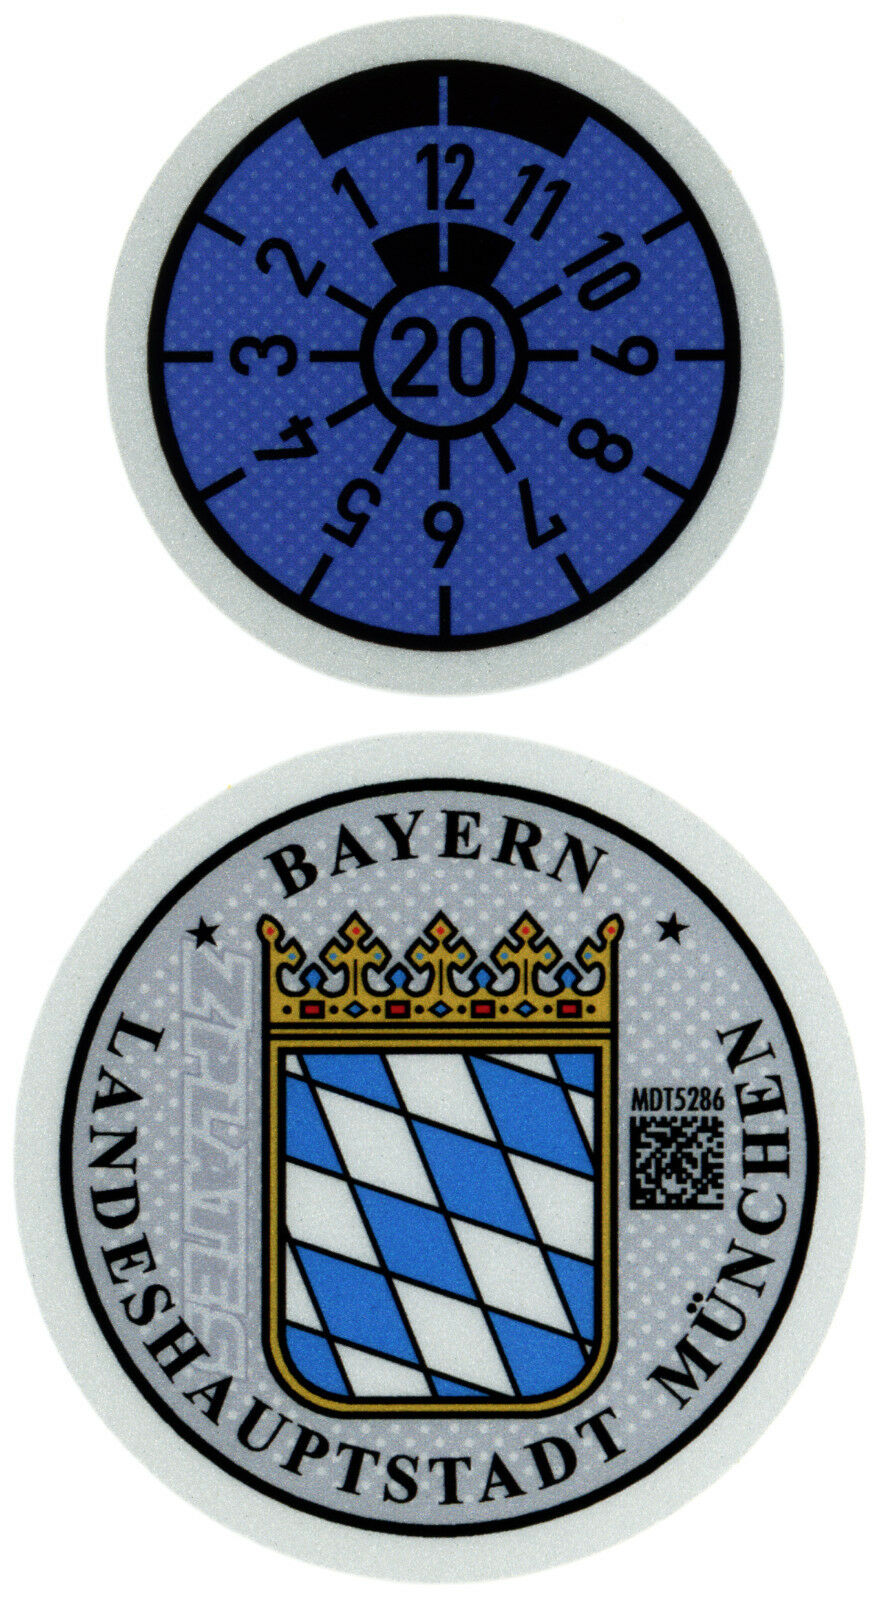 German European License Plate Registration And Inspection Sticker Set - Munich